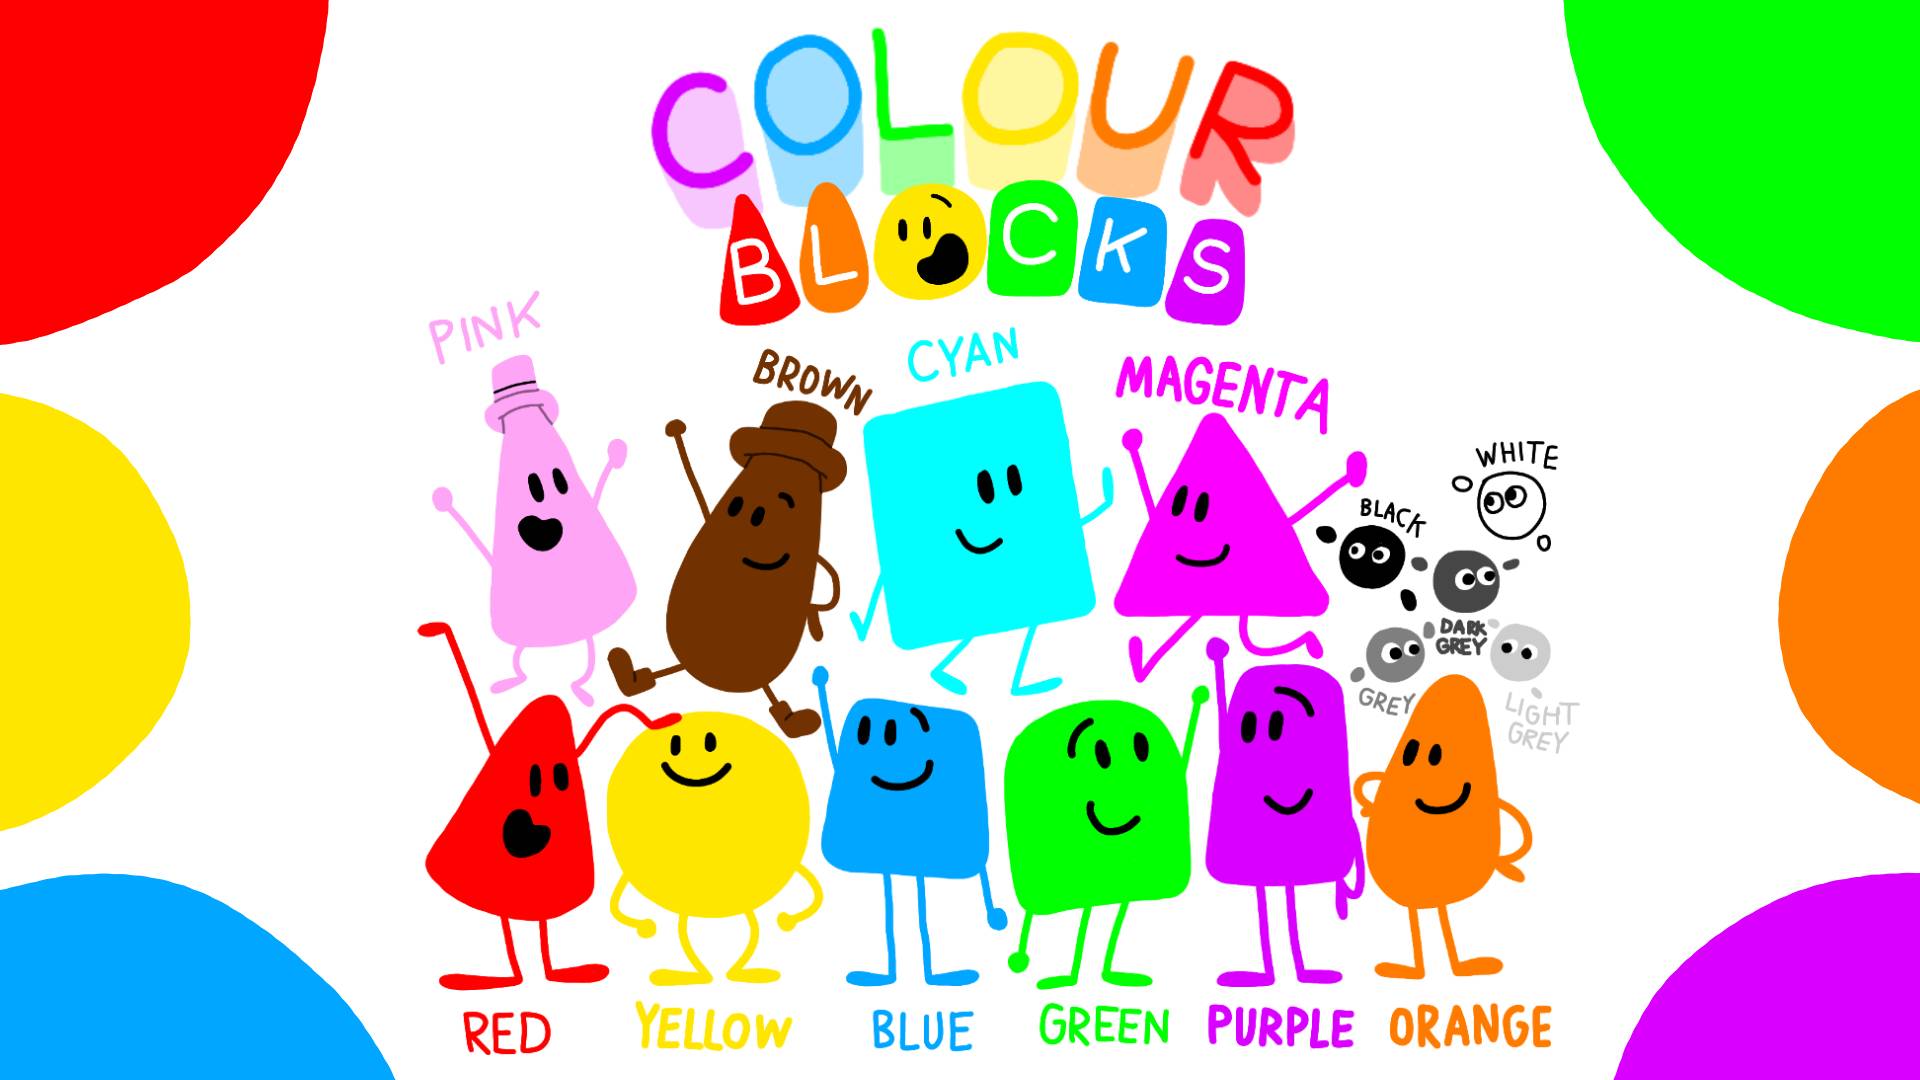 Meet the Colourblocks! 🔴🟠🟡🟢🔵🟣